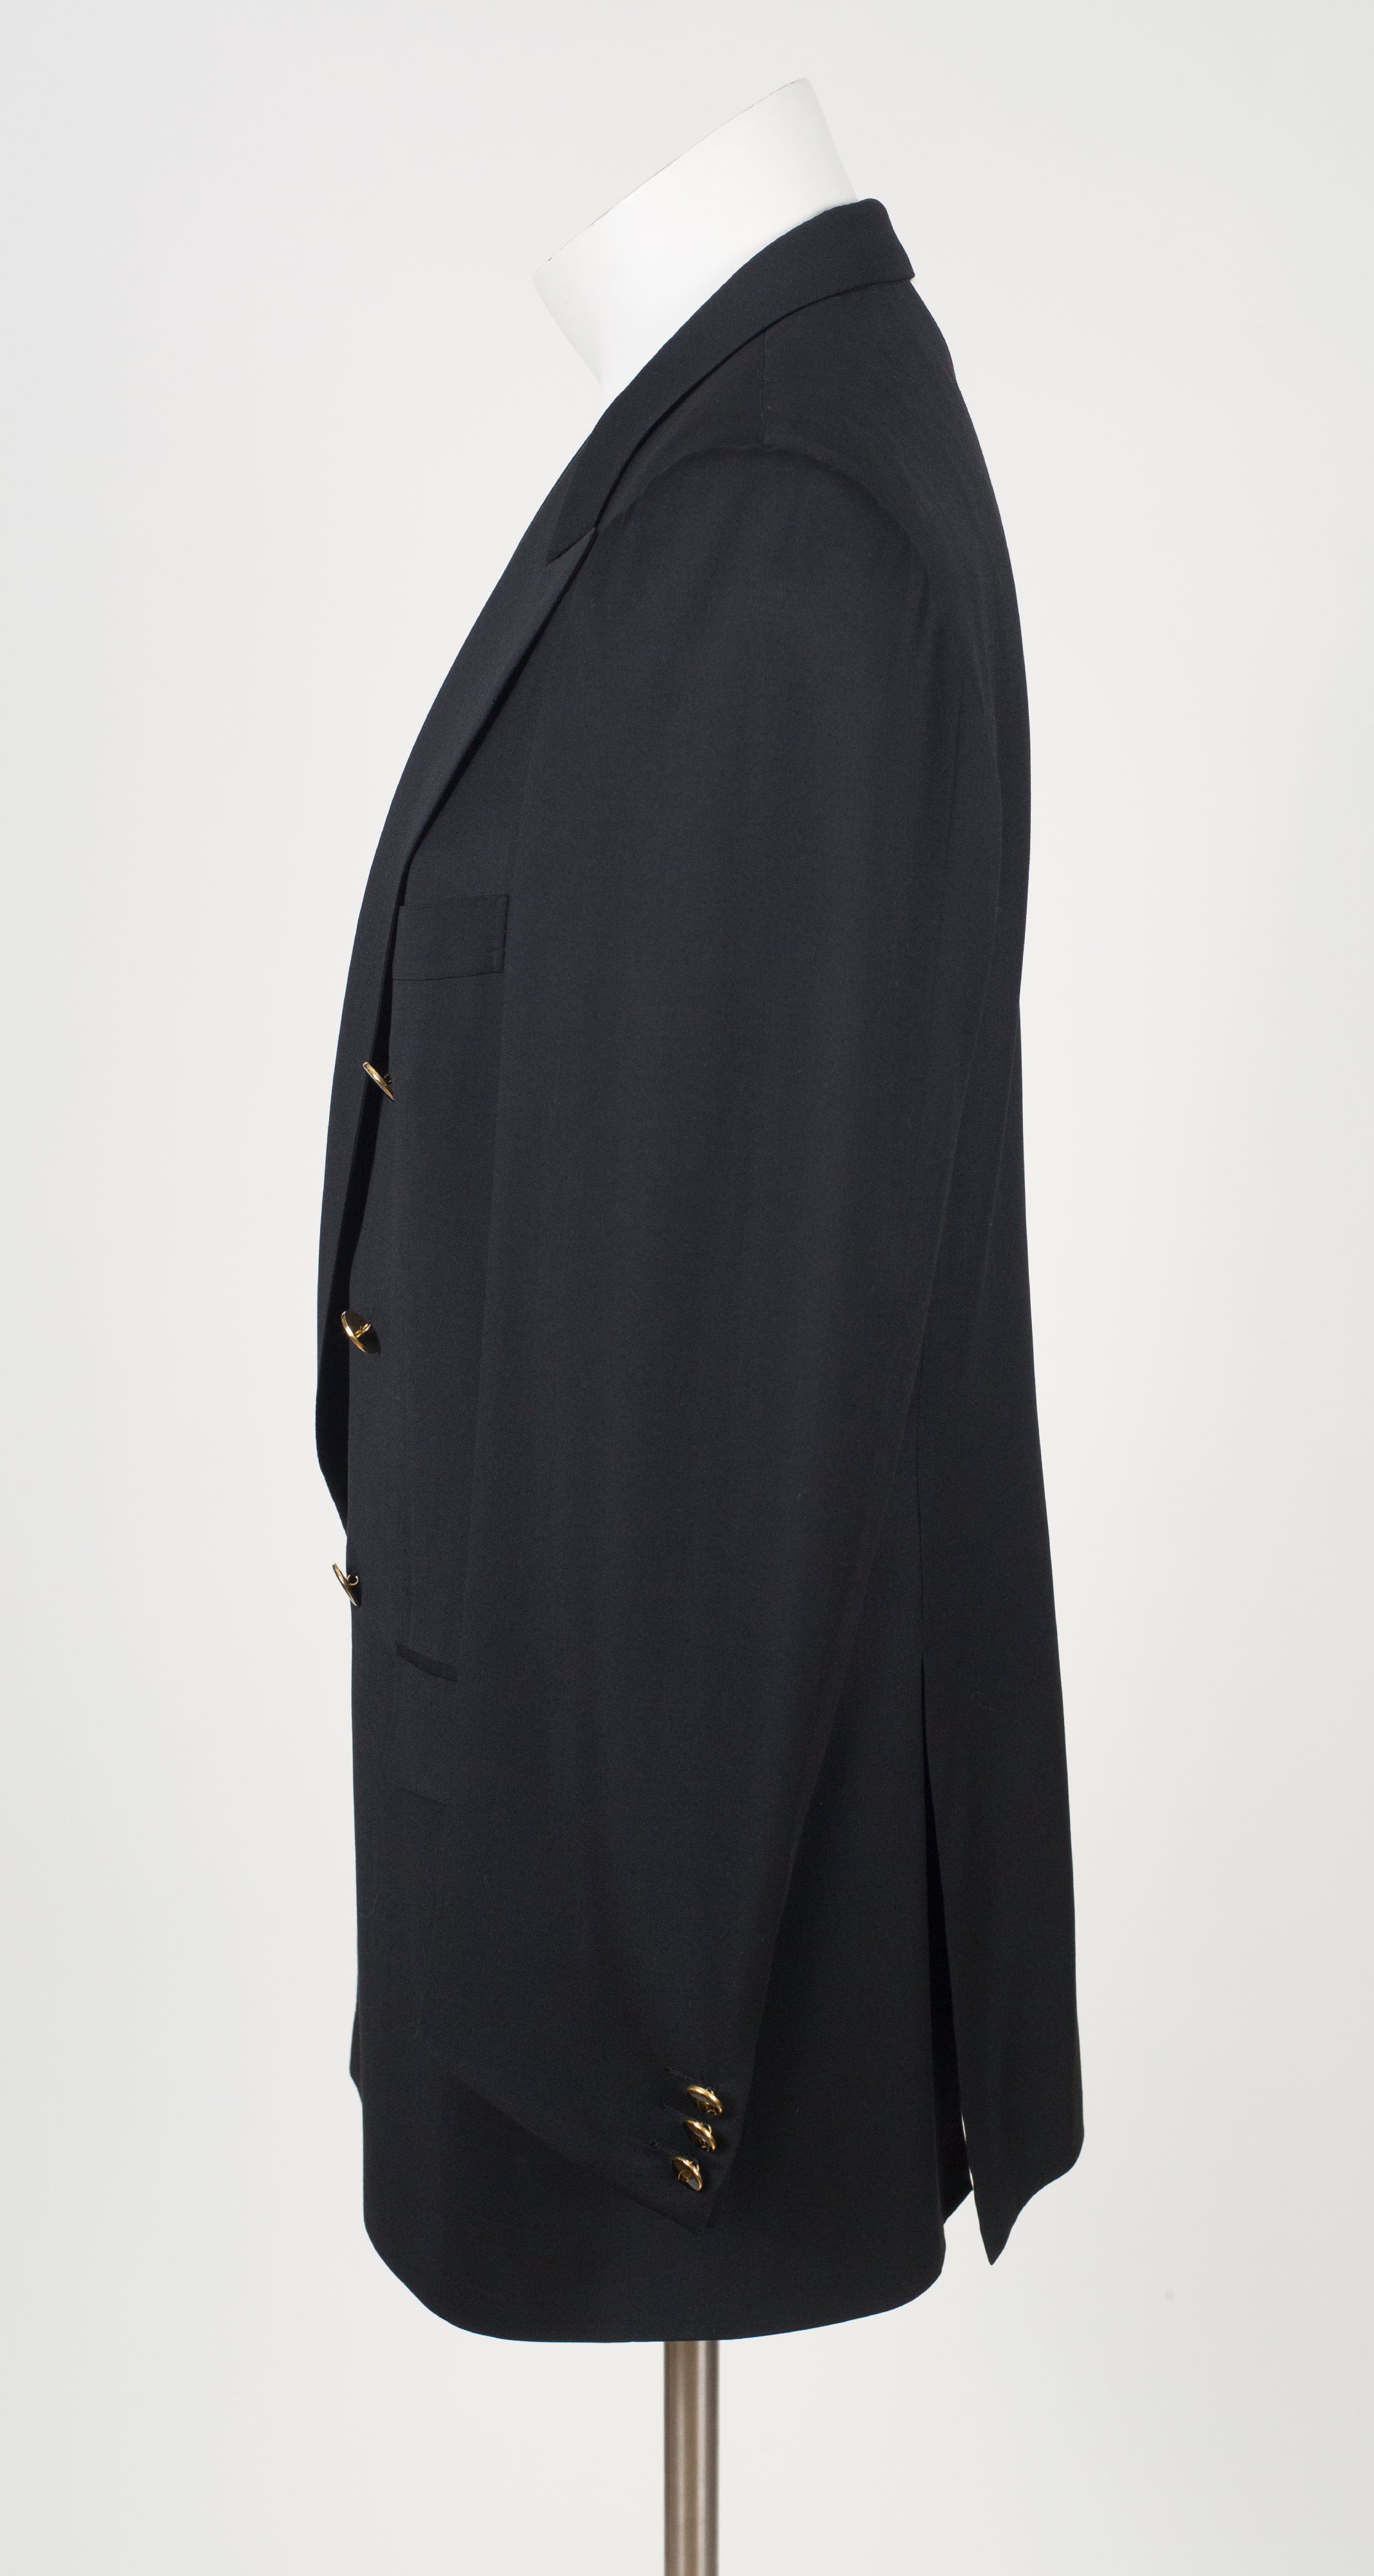 1990s Men's "Tiberio" Black Wool Double-Breasted Suit Jacket